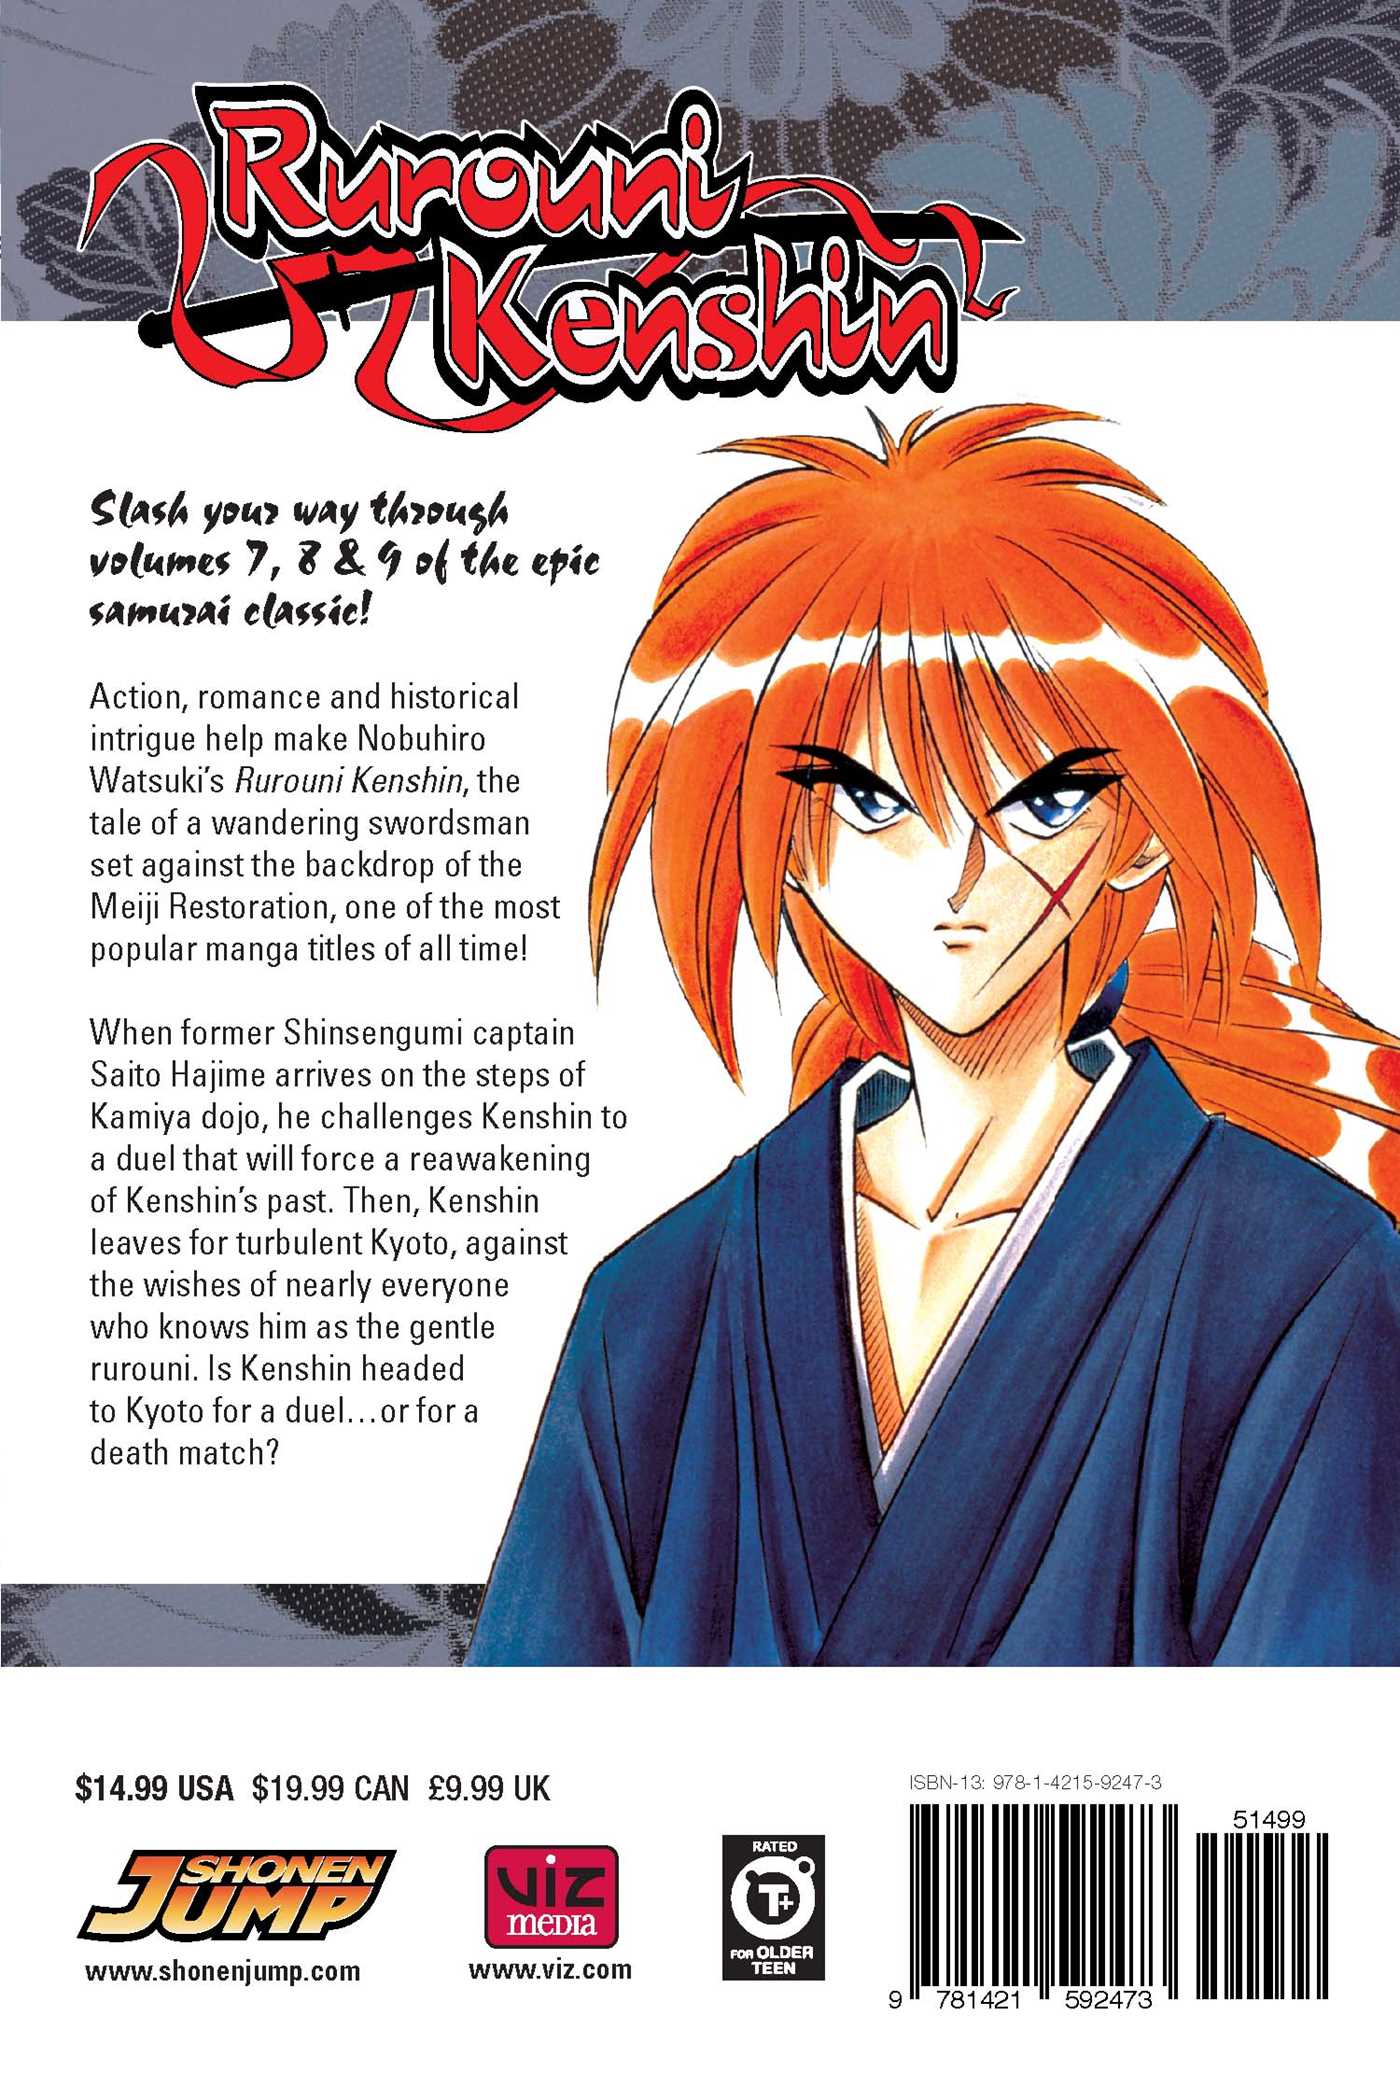 Rurouni Kenshin 3-in-1 Edition Manga Volume 8